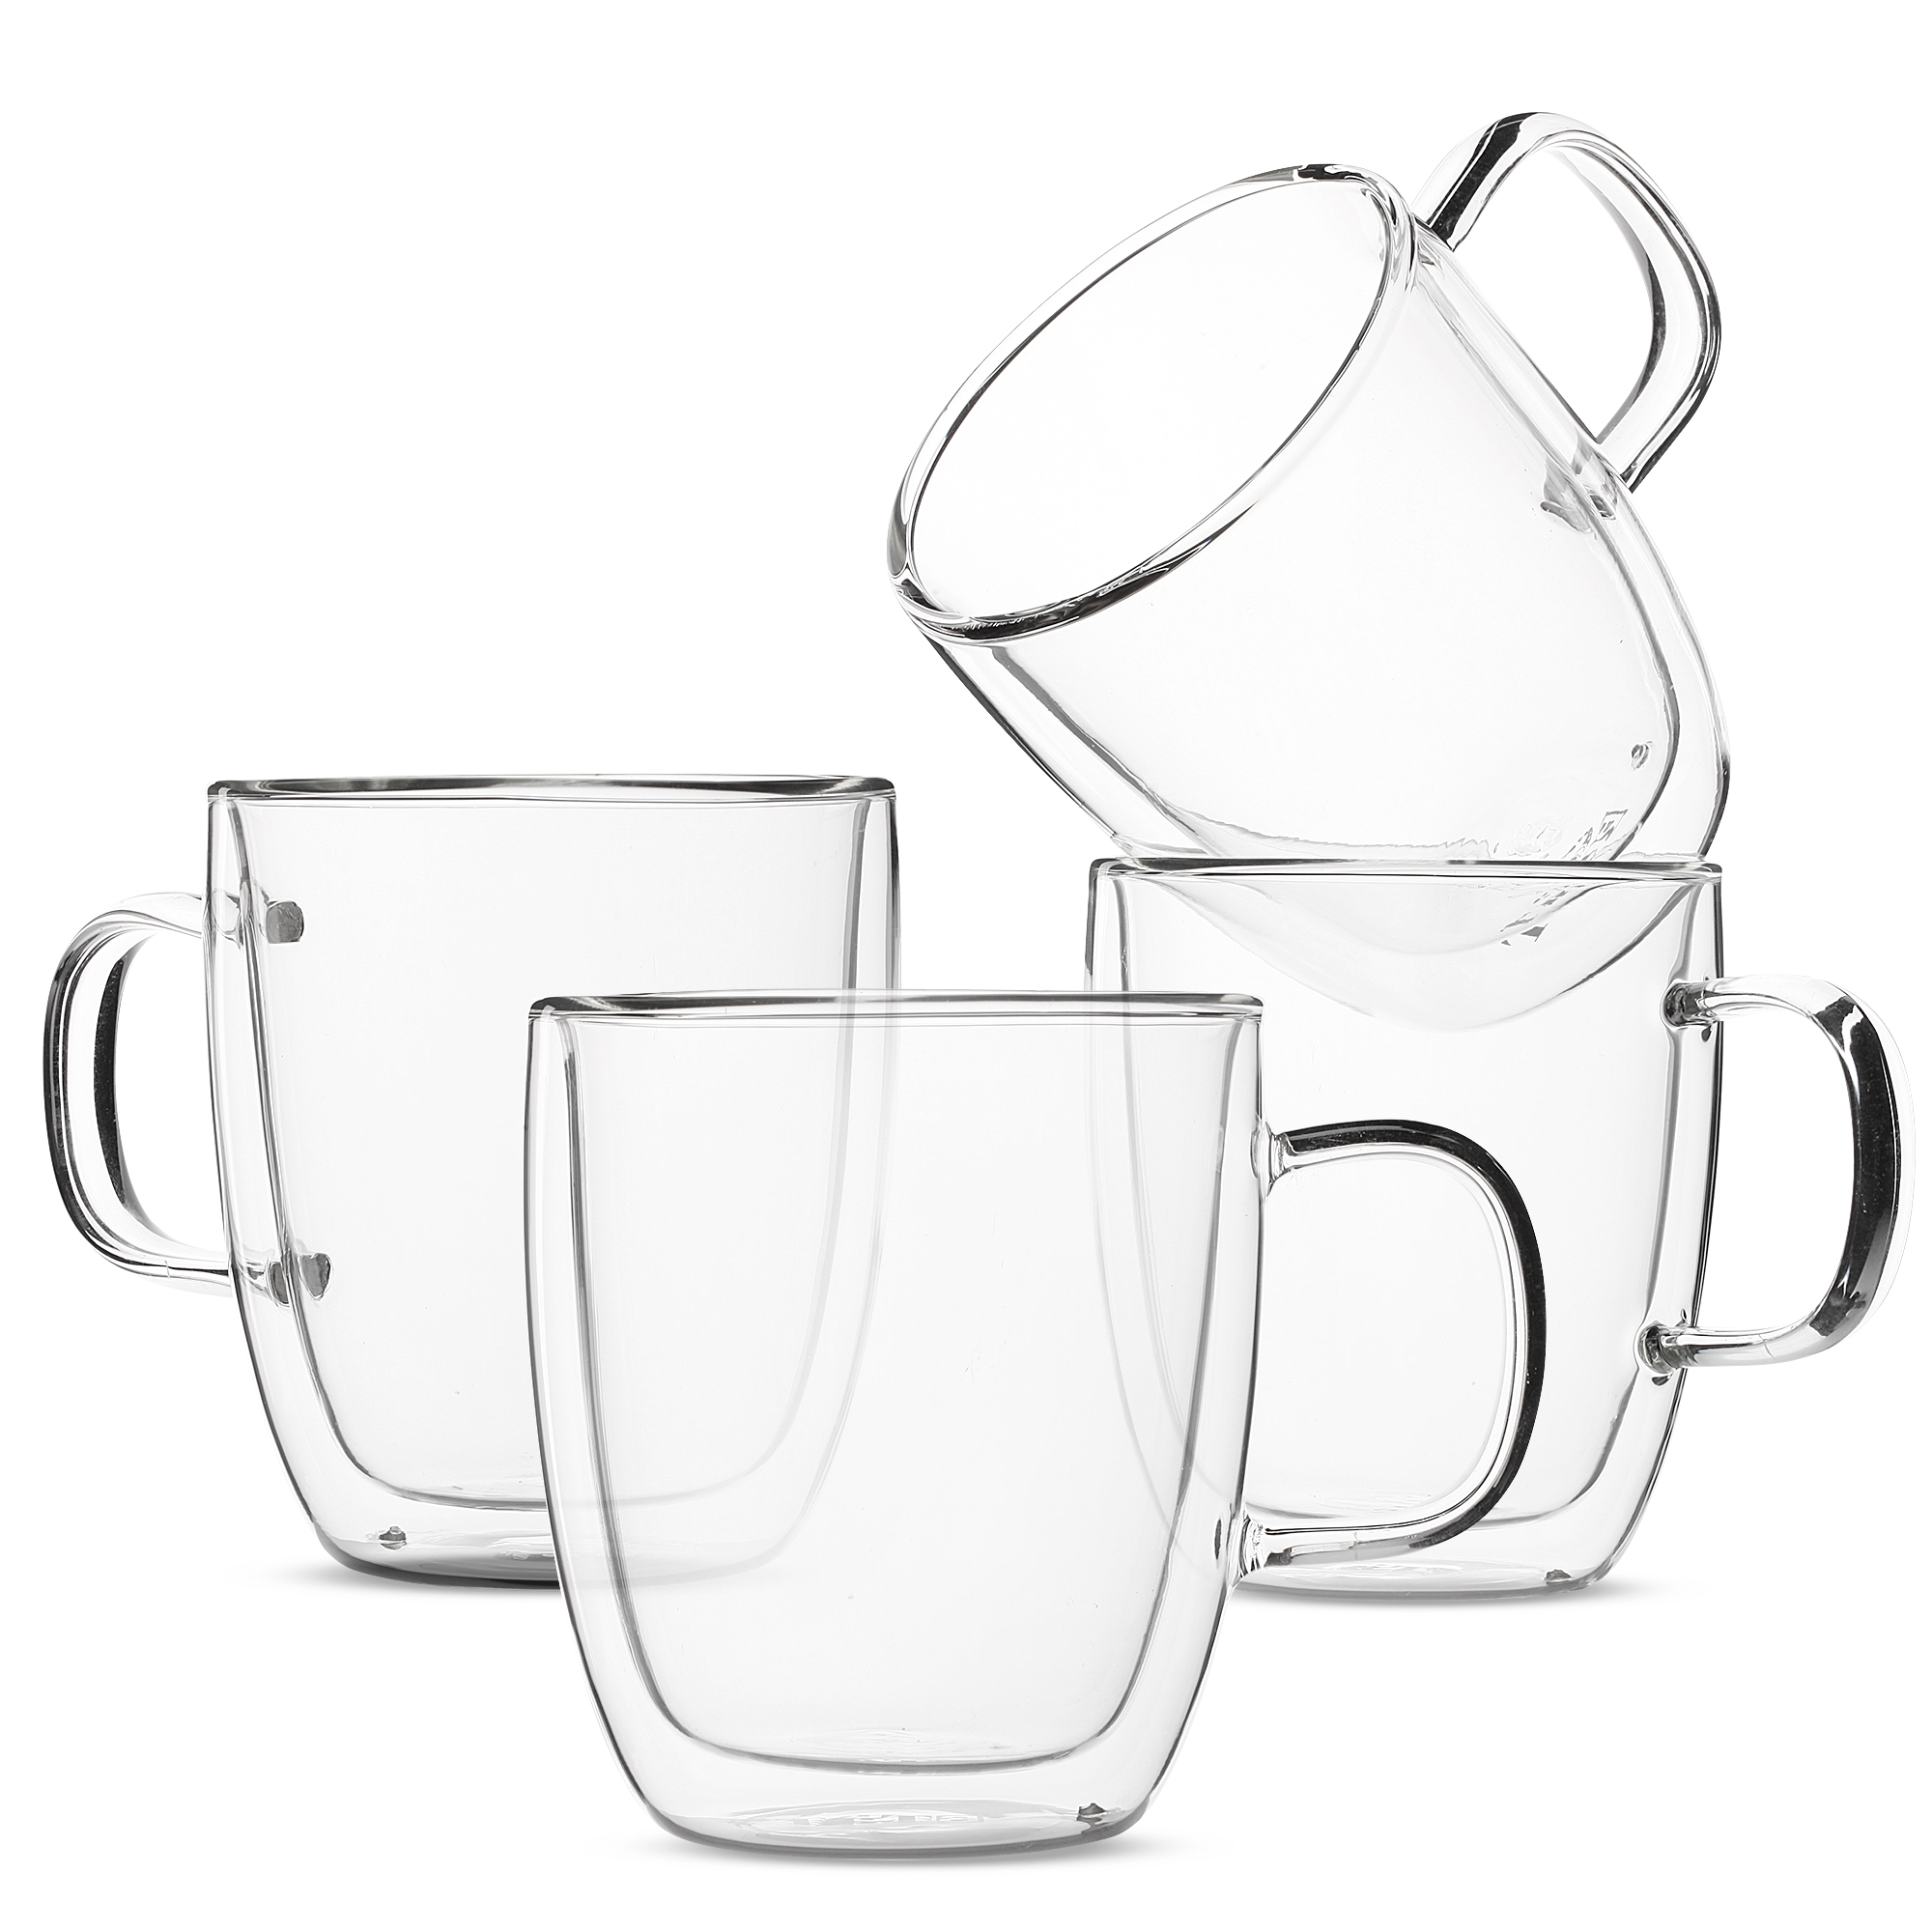  Glass Coffee Mug, Double Wall Insulated Glass Cup 12